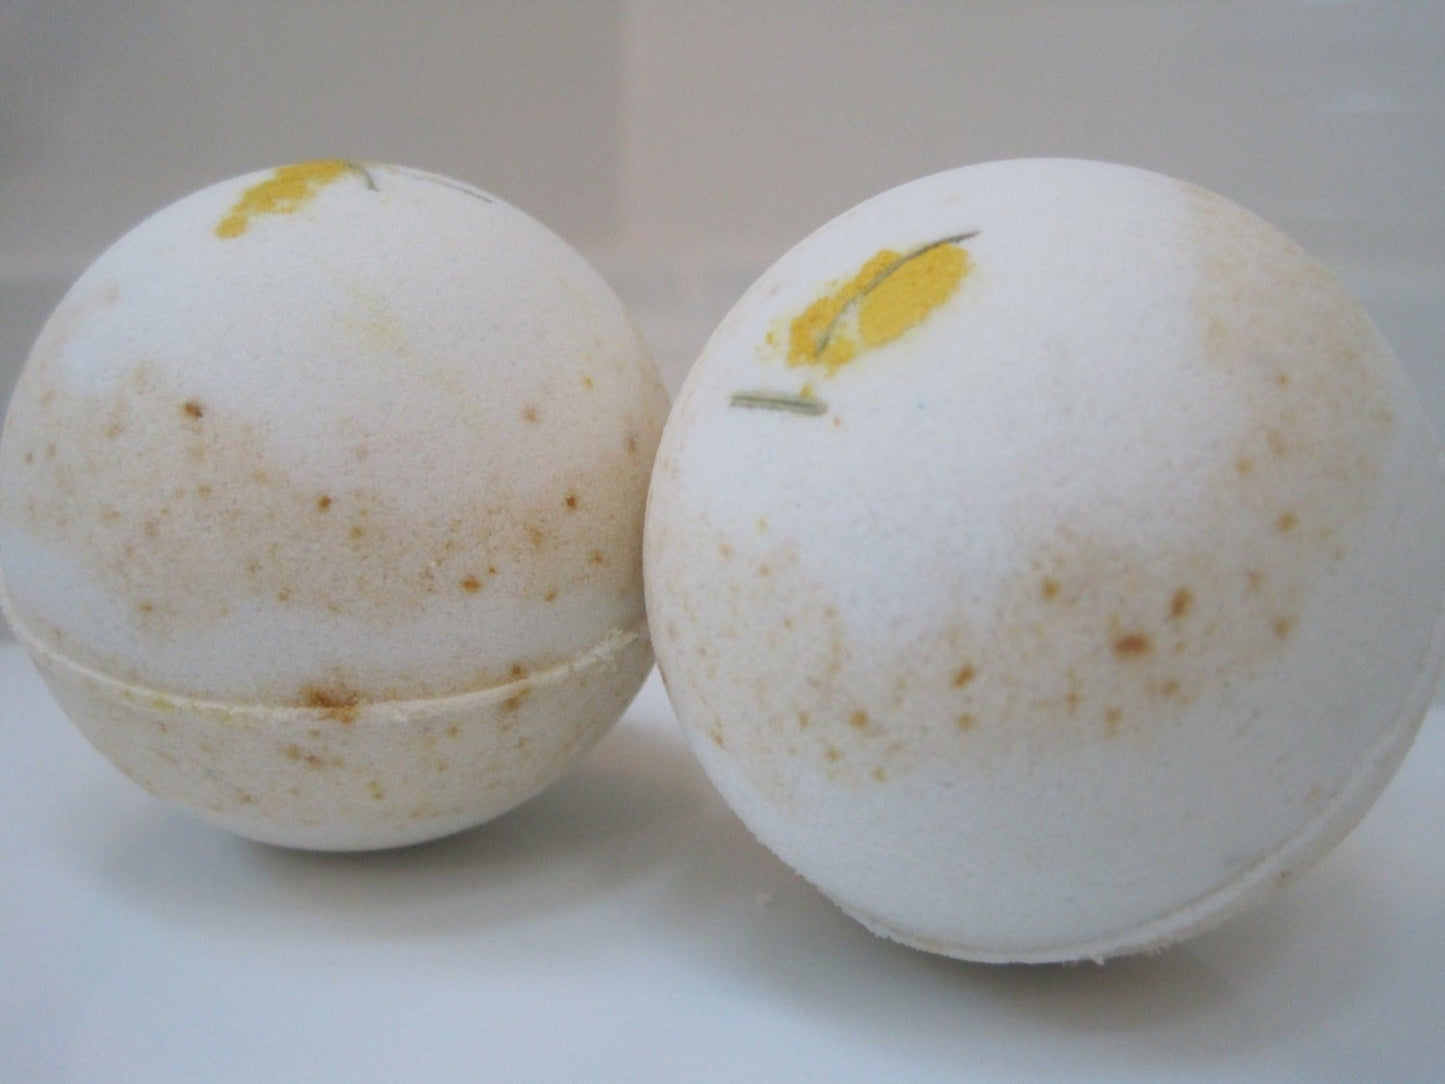 Coconut Scented Bath Bombs with Handmade Soap Inside - 2 ct - Berwyn Betty's Bath & Body Shop